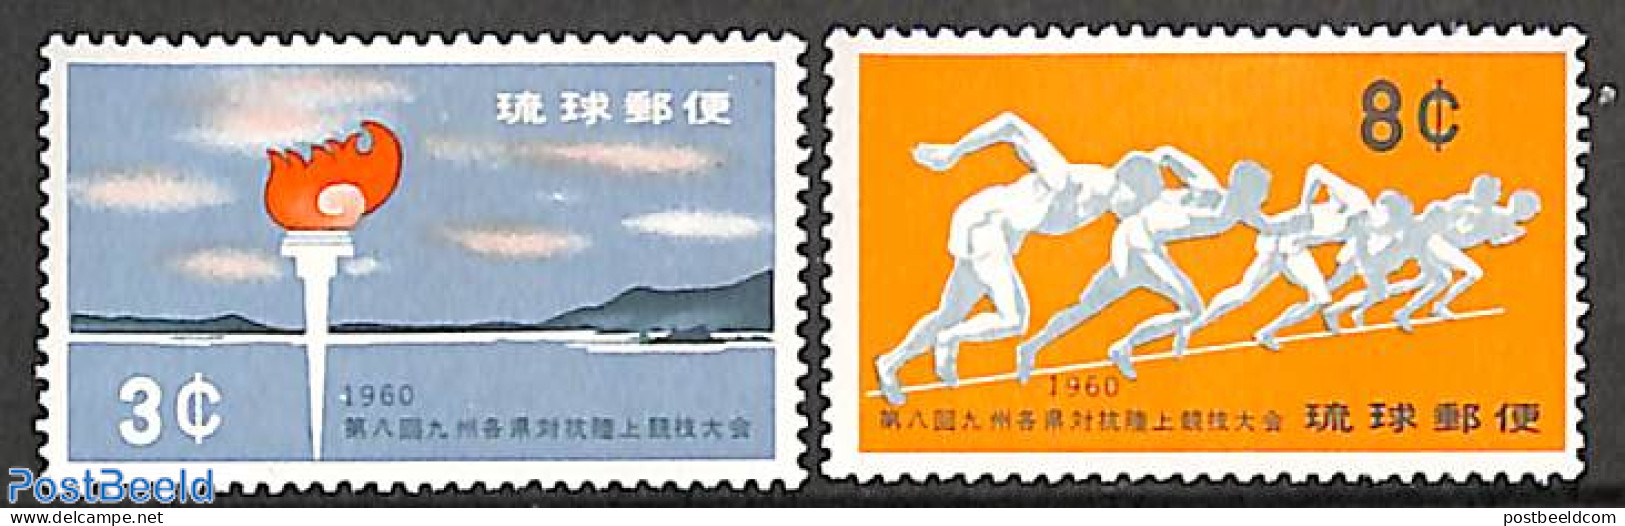 Ryu-Kyu 1960 Athletic Meeting 2v, Mint NH, Sport - Athletics - Sport (other And Mixed) - Leichtathletik